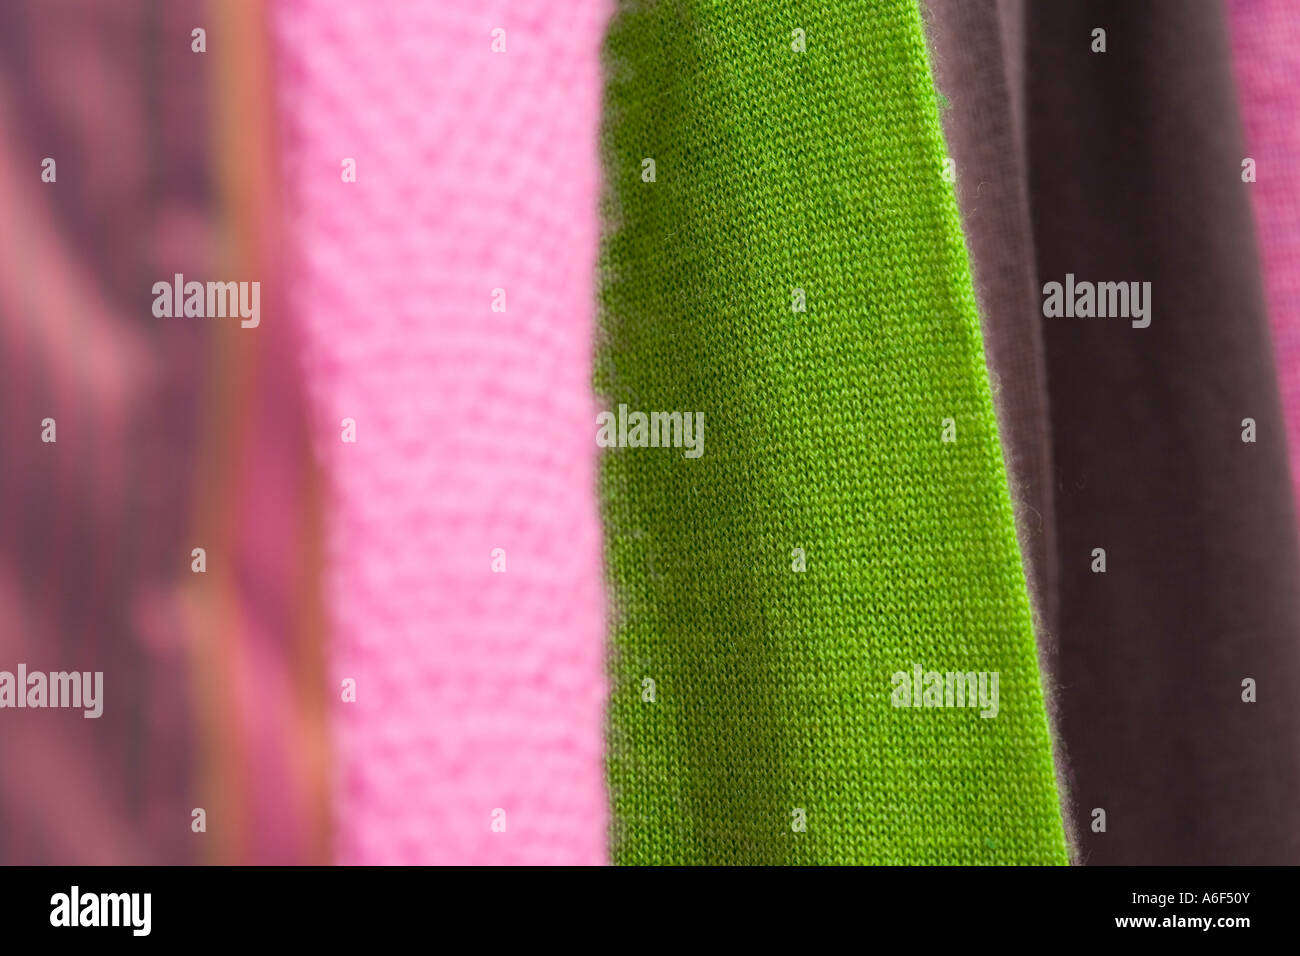 Clothing fabric closeup Stock Photo